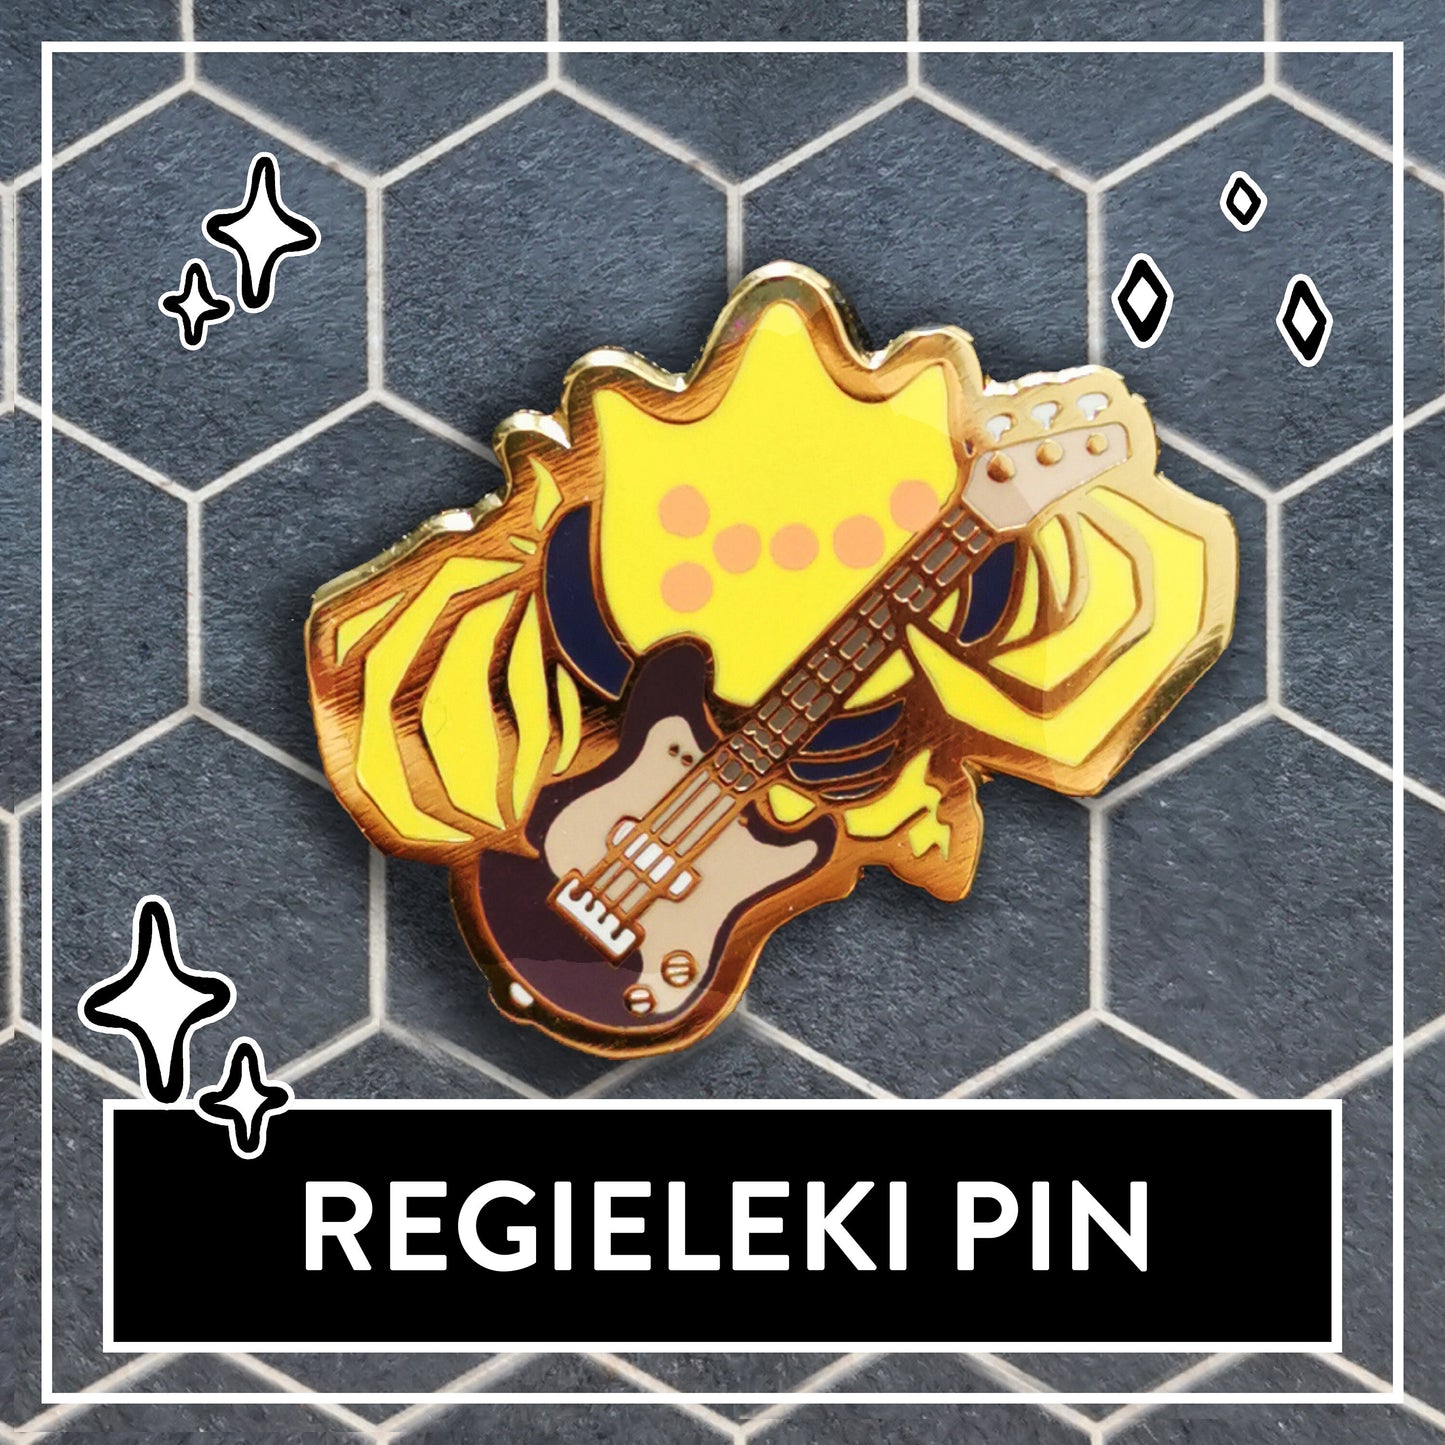 Pokemon Legendary Regi Pins – Small & cute Hard Enamel Pins Regieleki, Regidrago, Regigigas Chibi Style